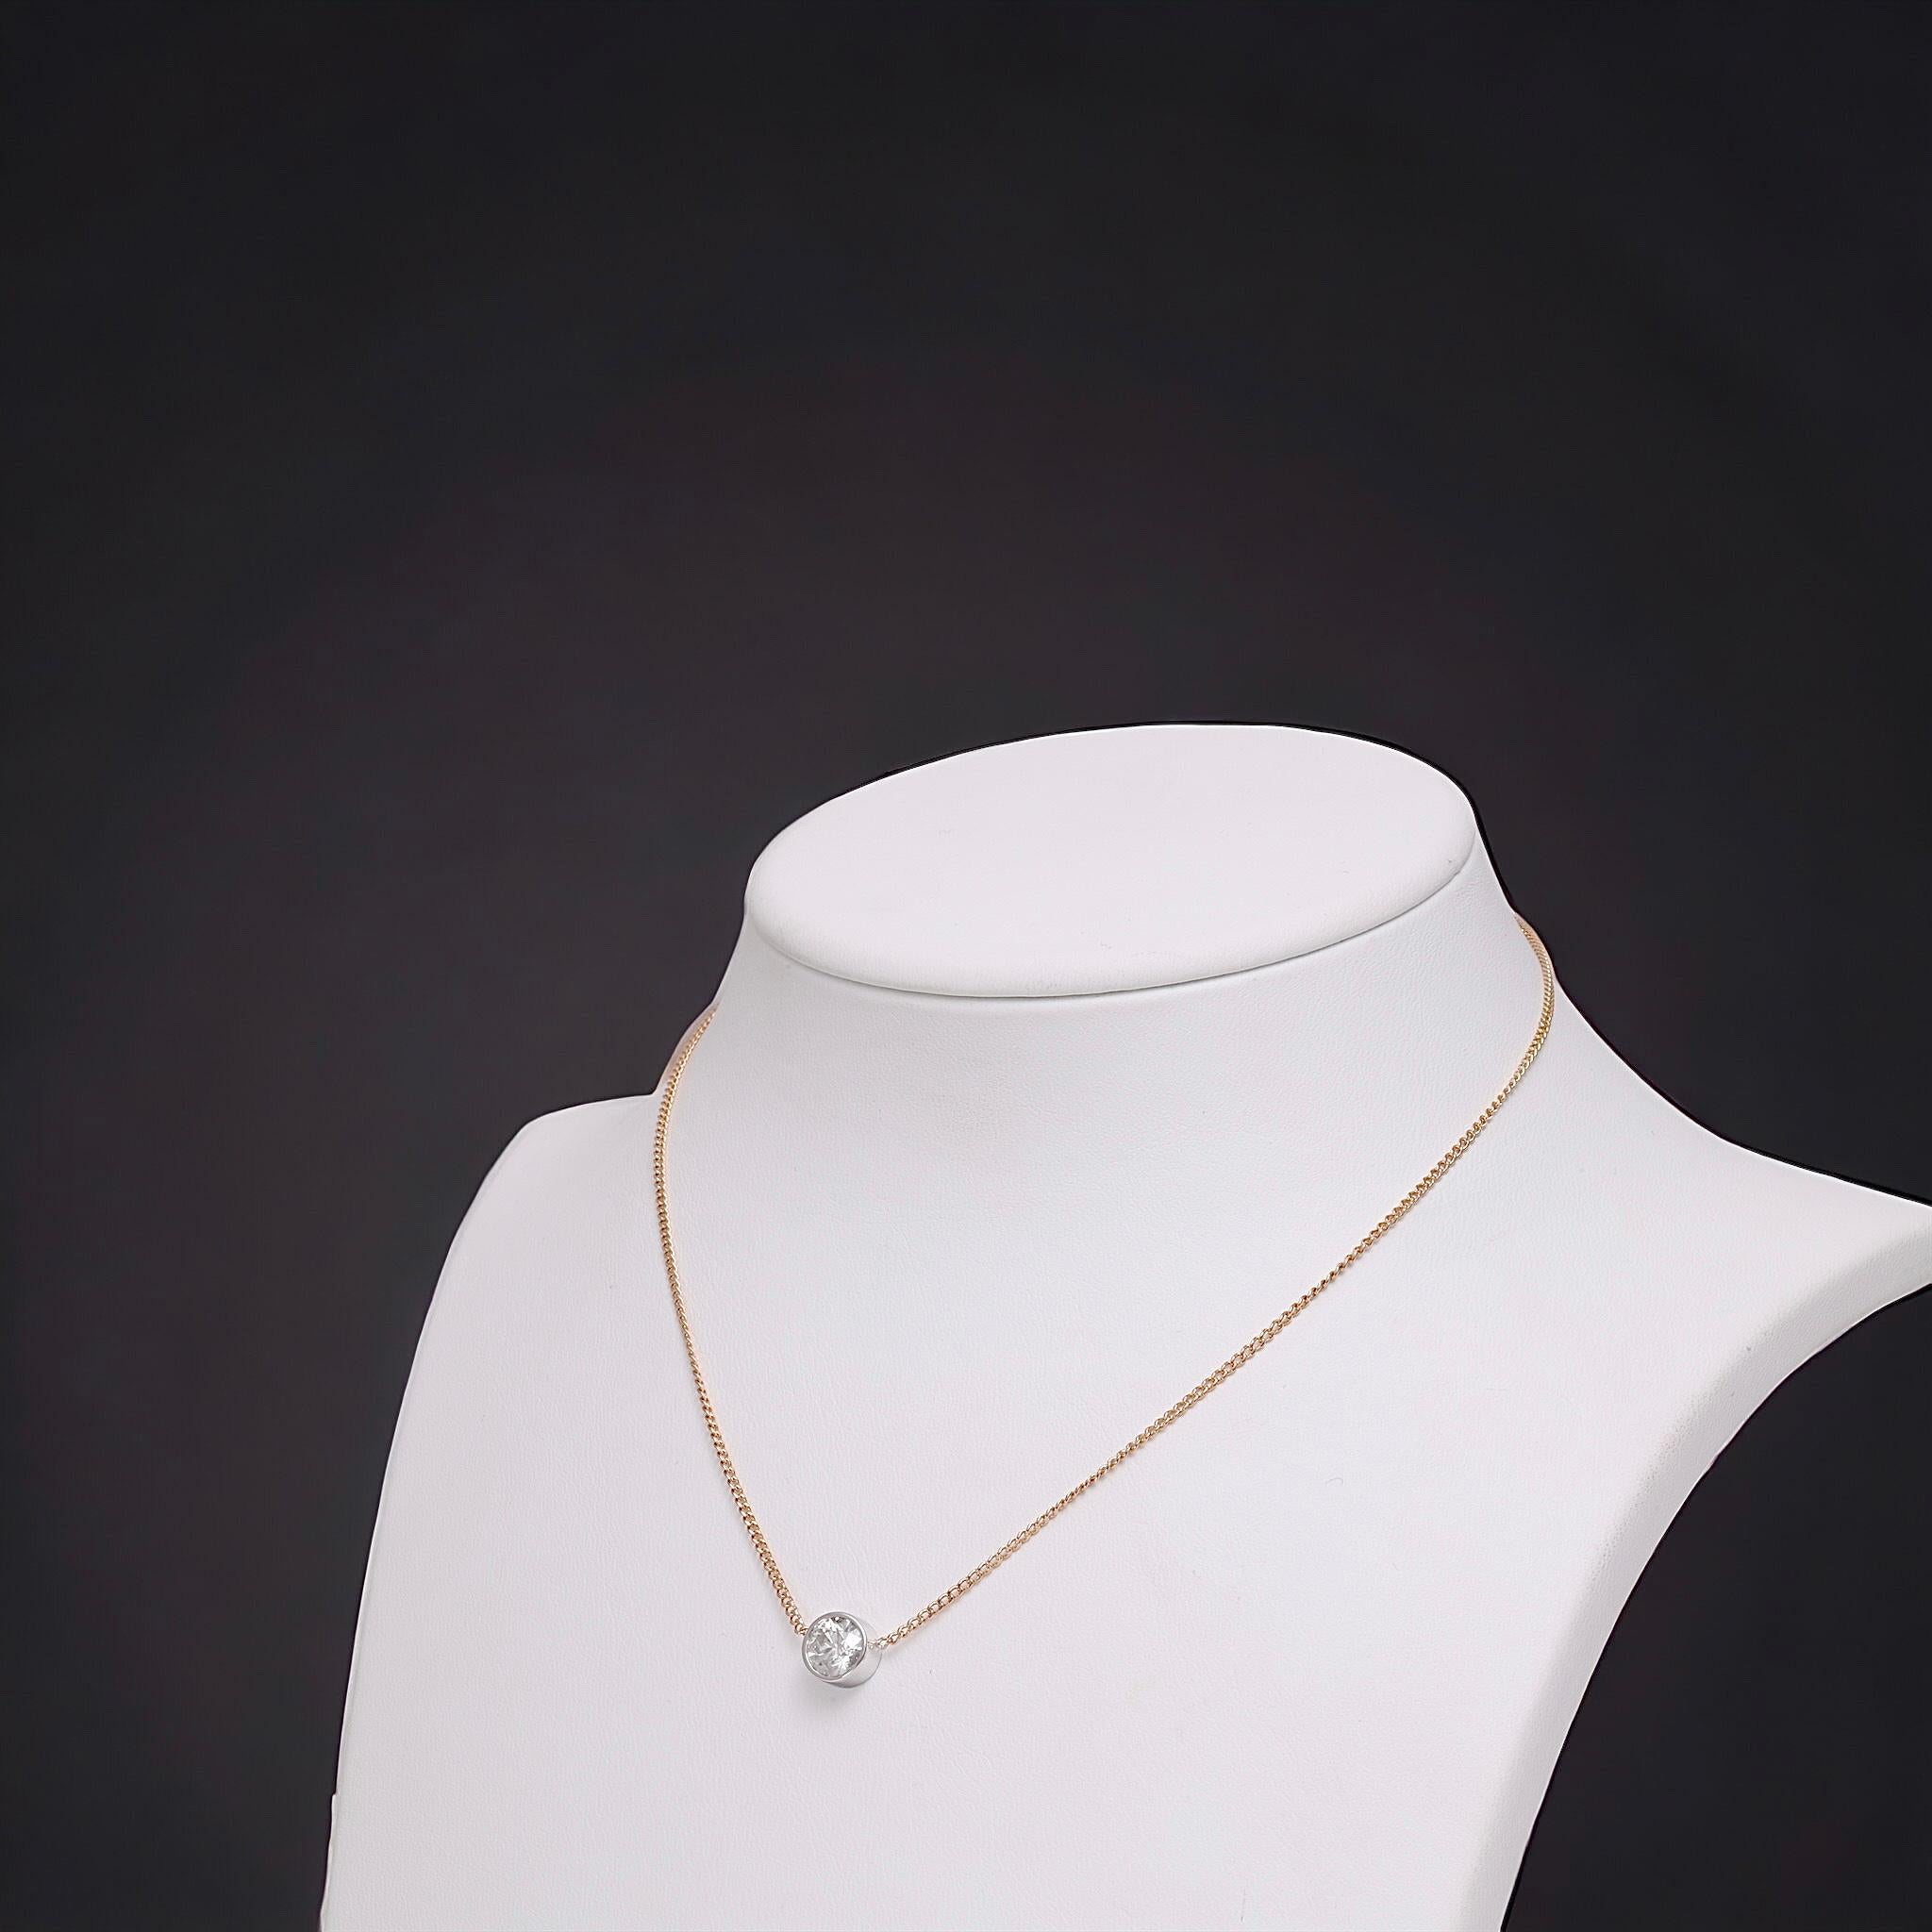 IGi Certified 18 kt. Gold Diamond Pendant Choker Necklace with 1.06 ct. Diamond For Sale 4